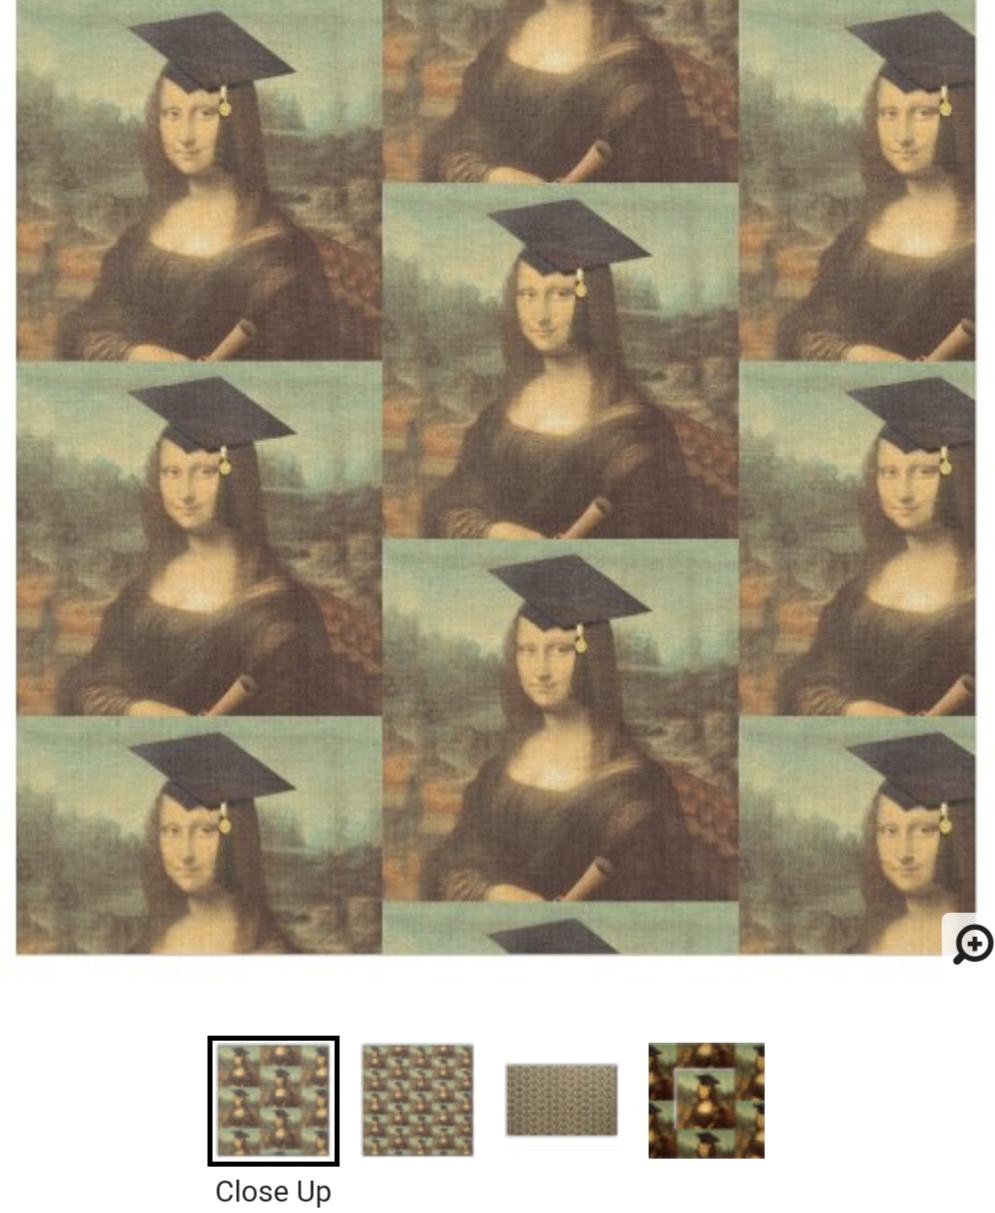 Mona Lisa Graduation fabric.